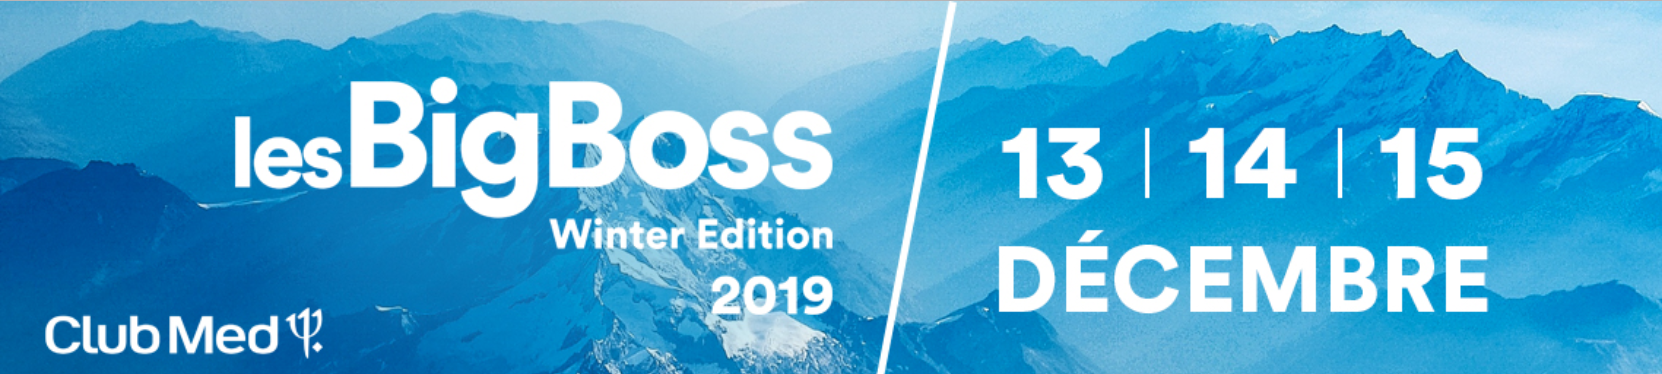 BigBoss Winter Edition 2019